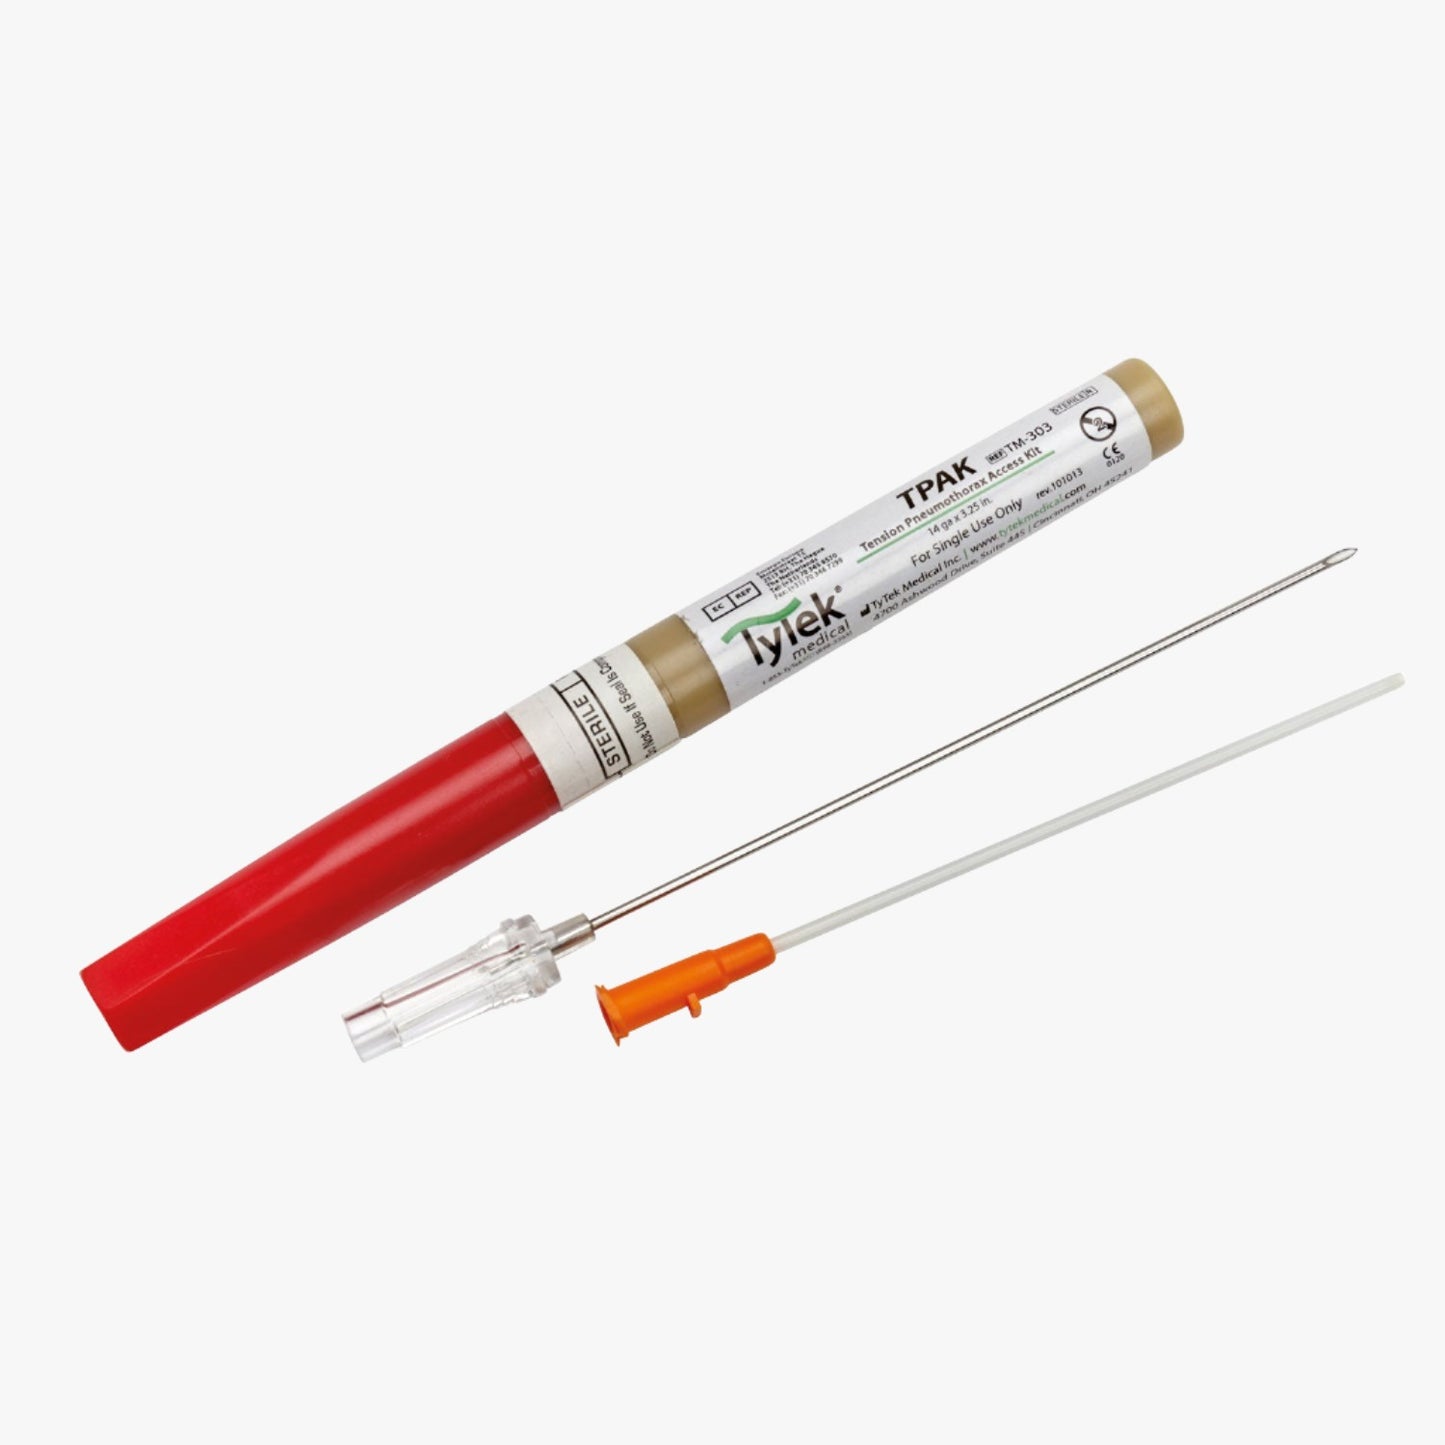 TPAK Chest Decompression Needle decompression needle 14G 1.6 x 83 mm